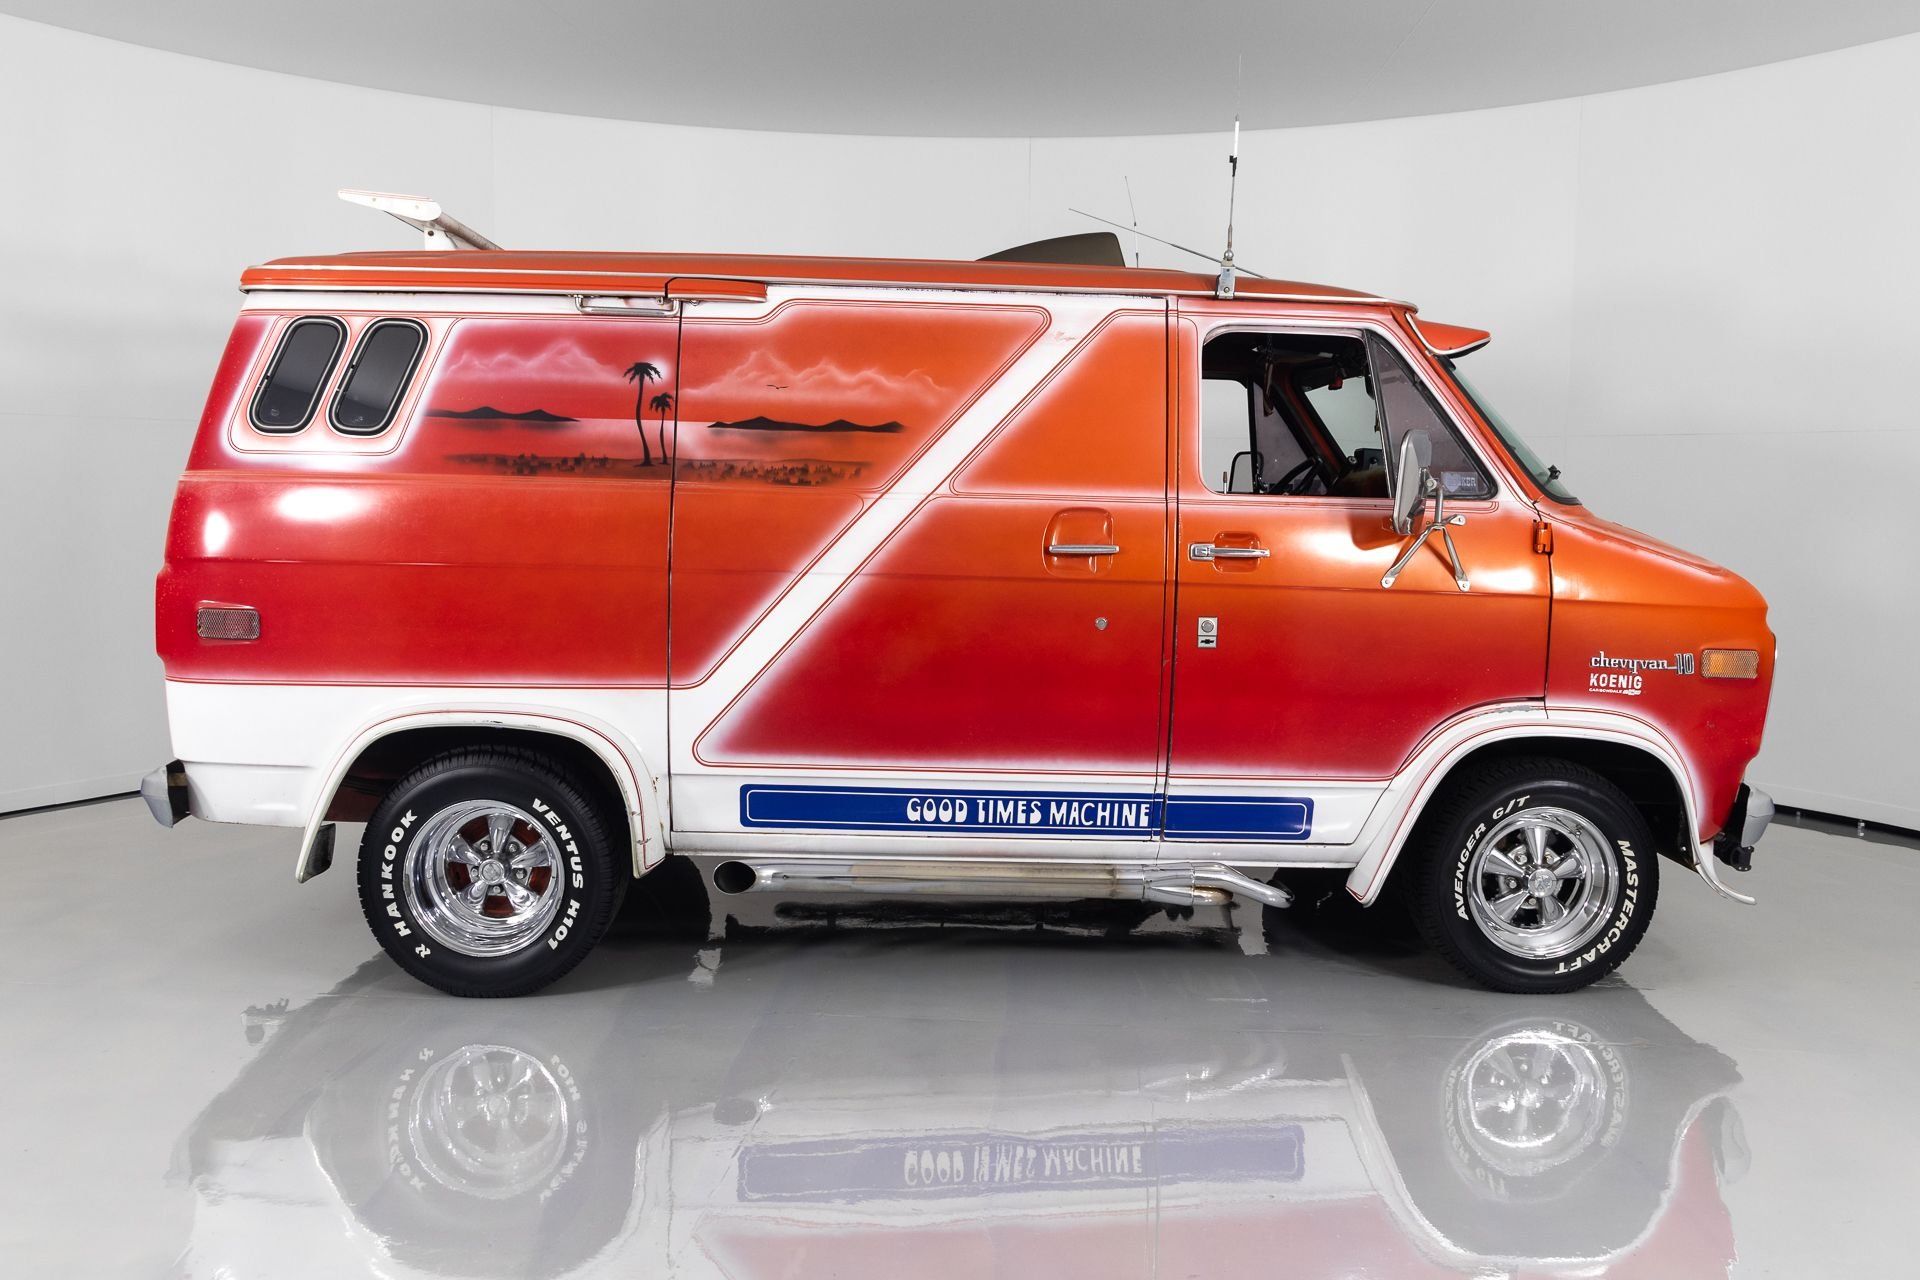 1976 Chevrolet Good Times Van | Fast Lane Classic Cars